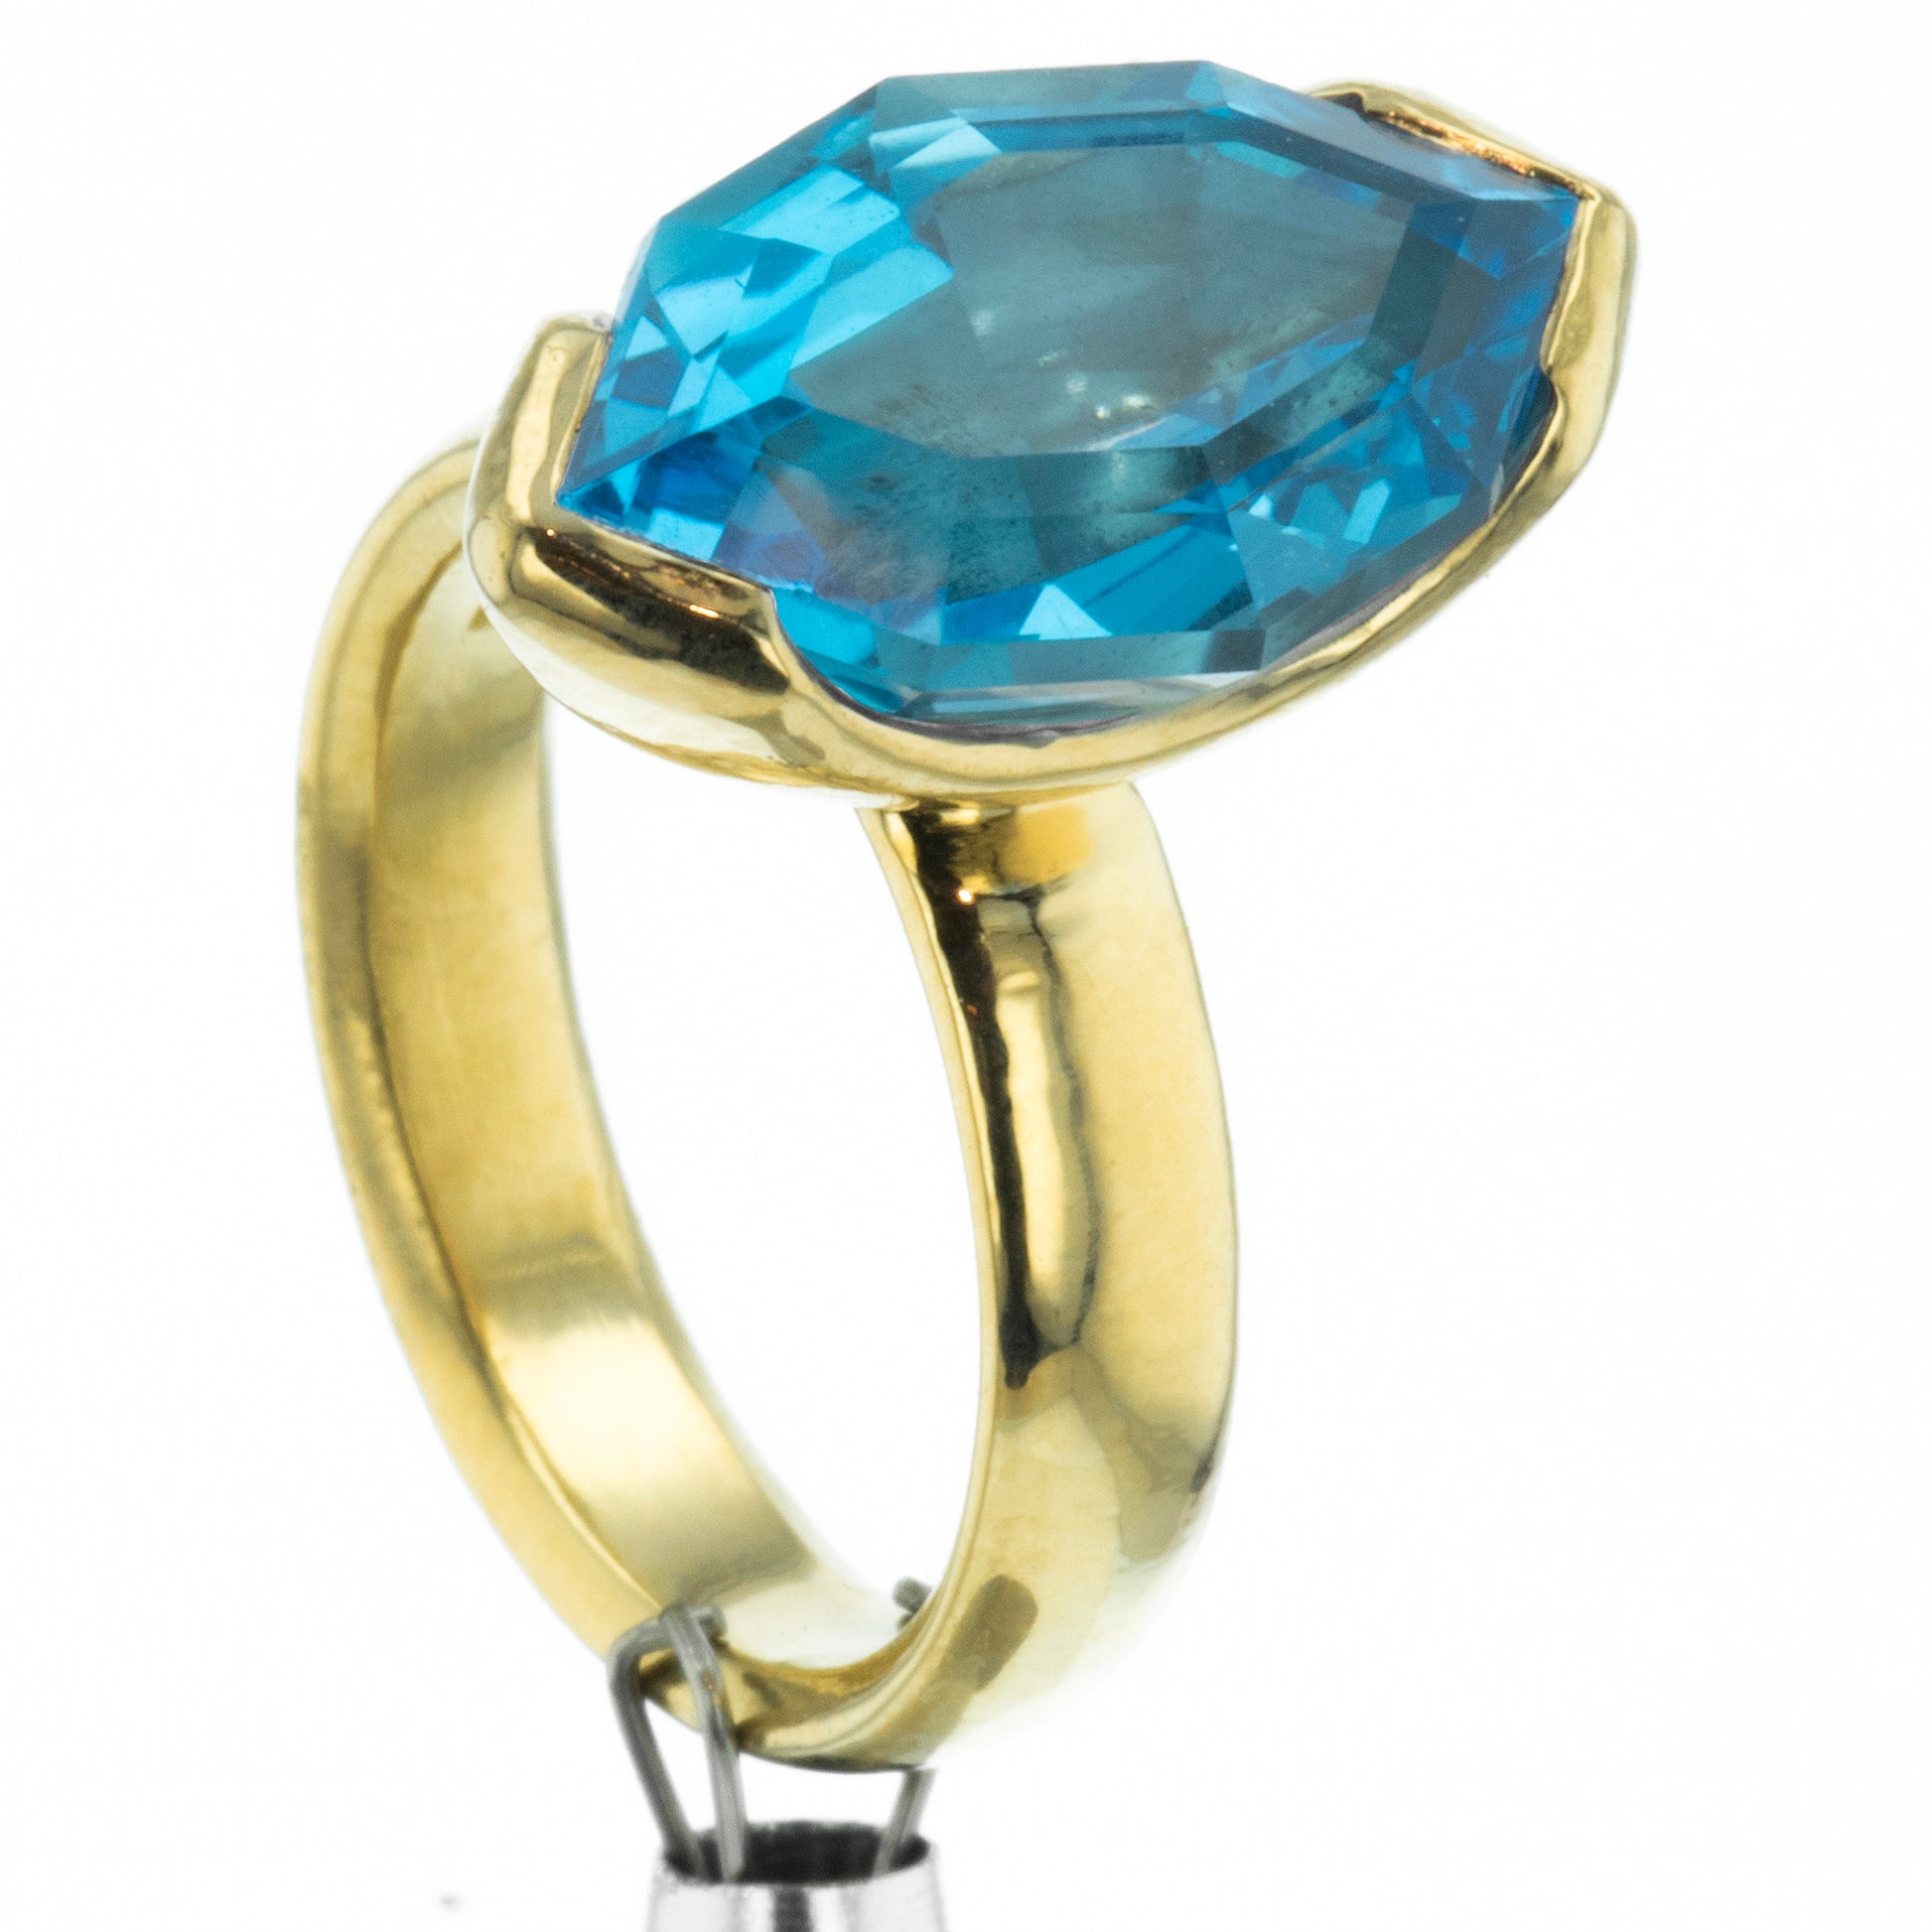 Blue topaz engagement ring